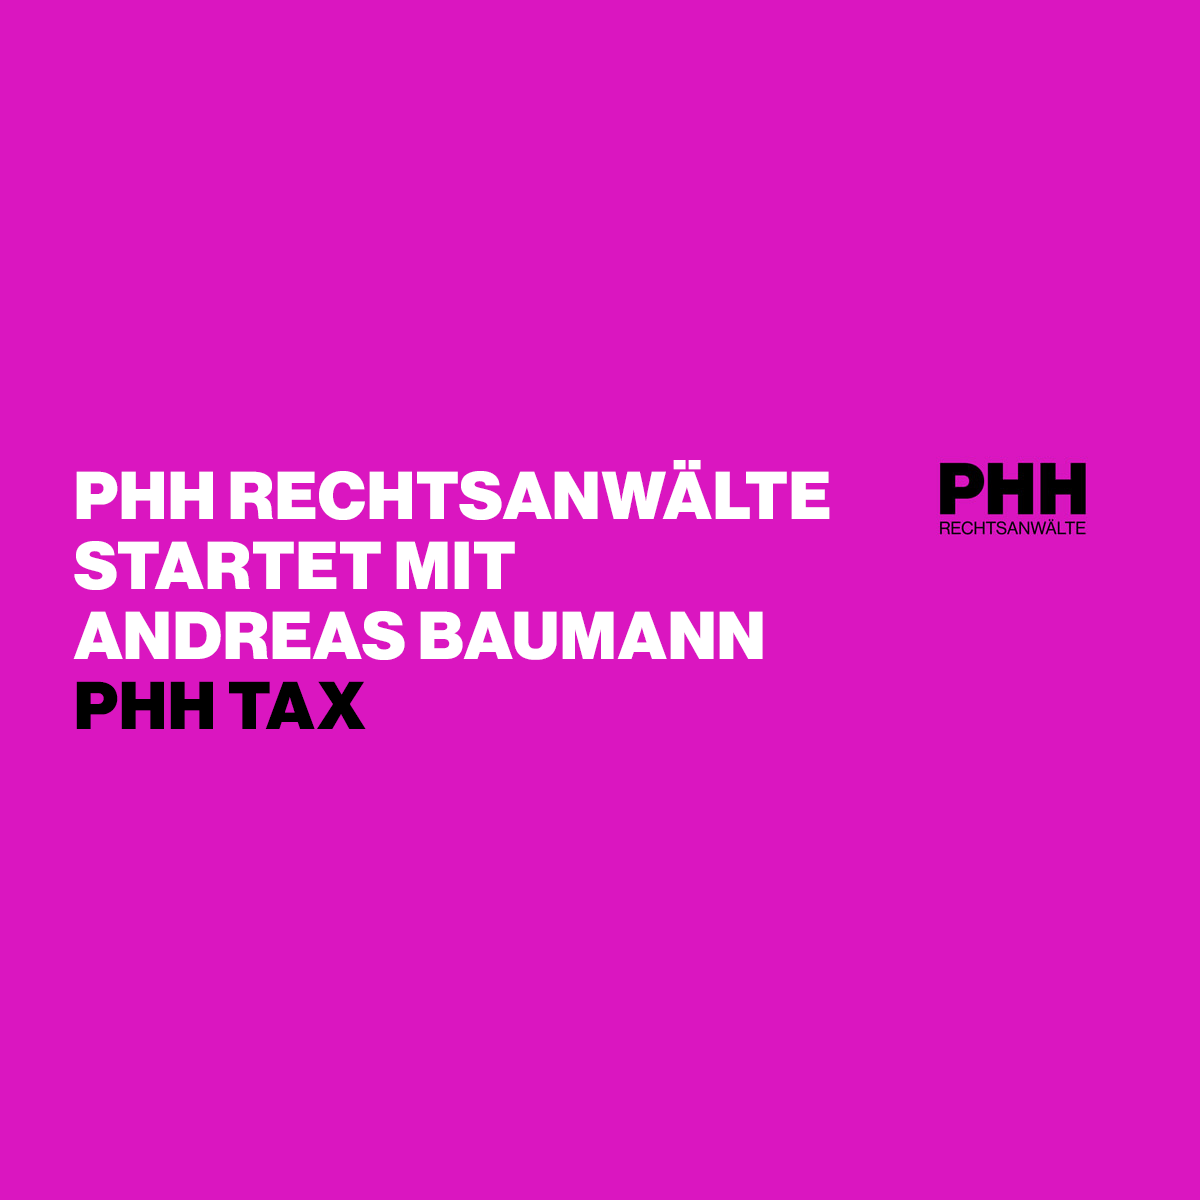 Rechtsanwält:innen is setting up “PHH Tax” with Andreas Baumann